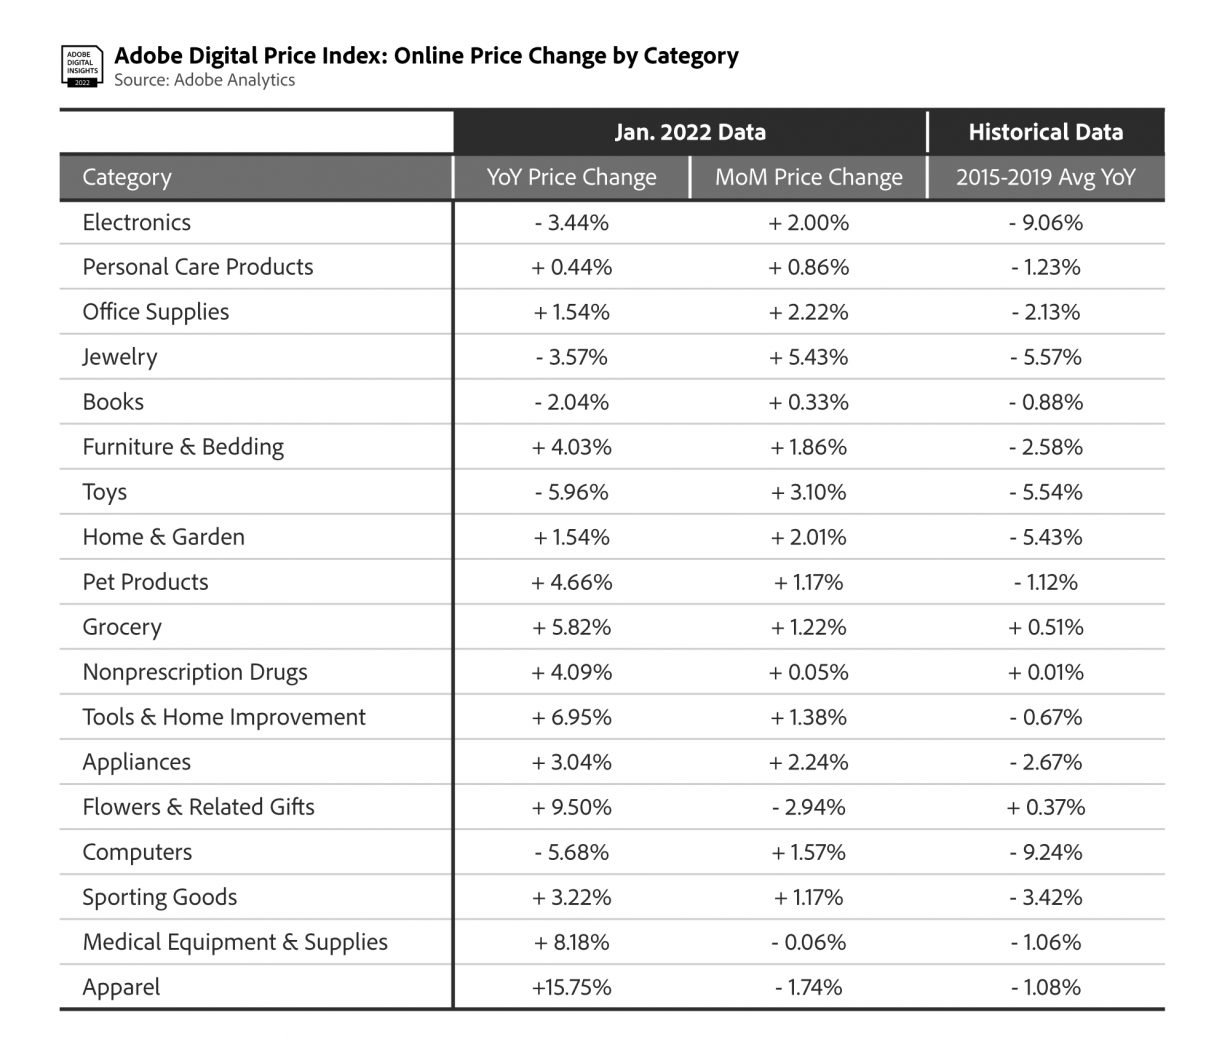 Adobe Digital Price Index